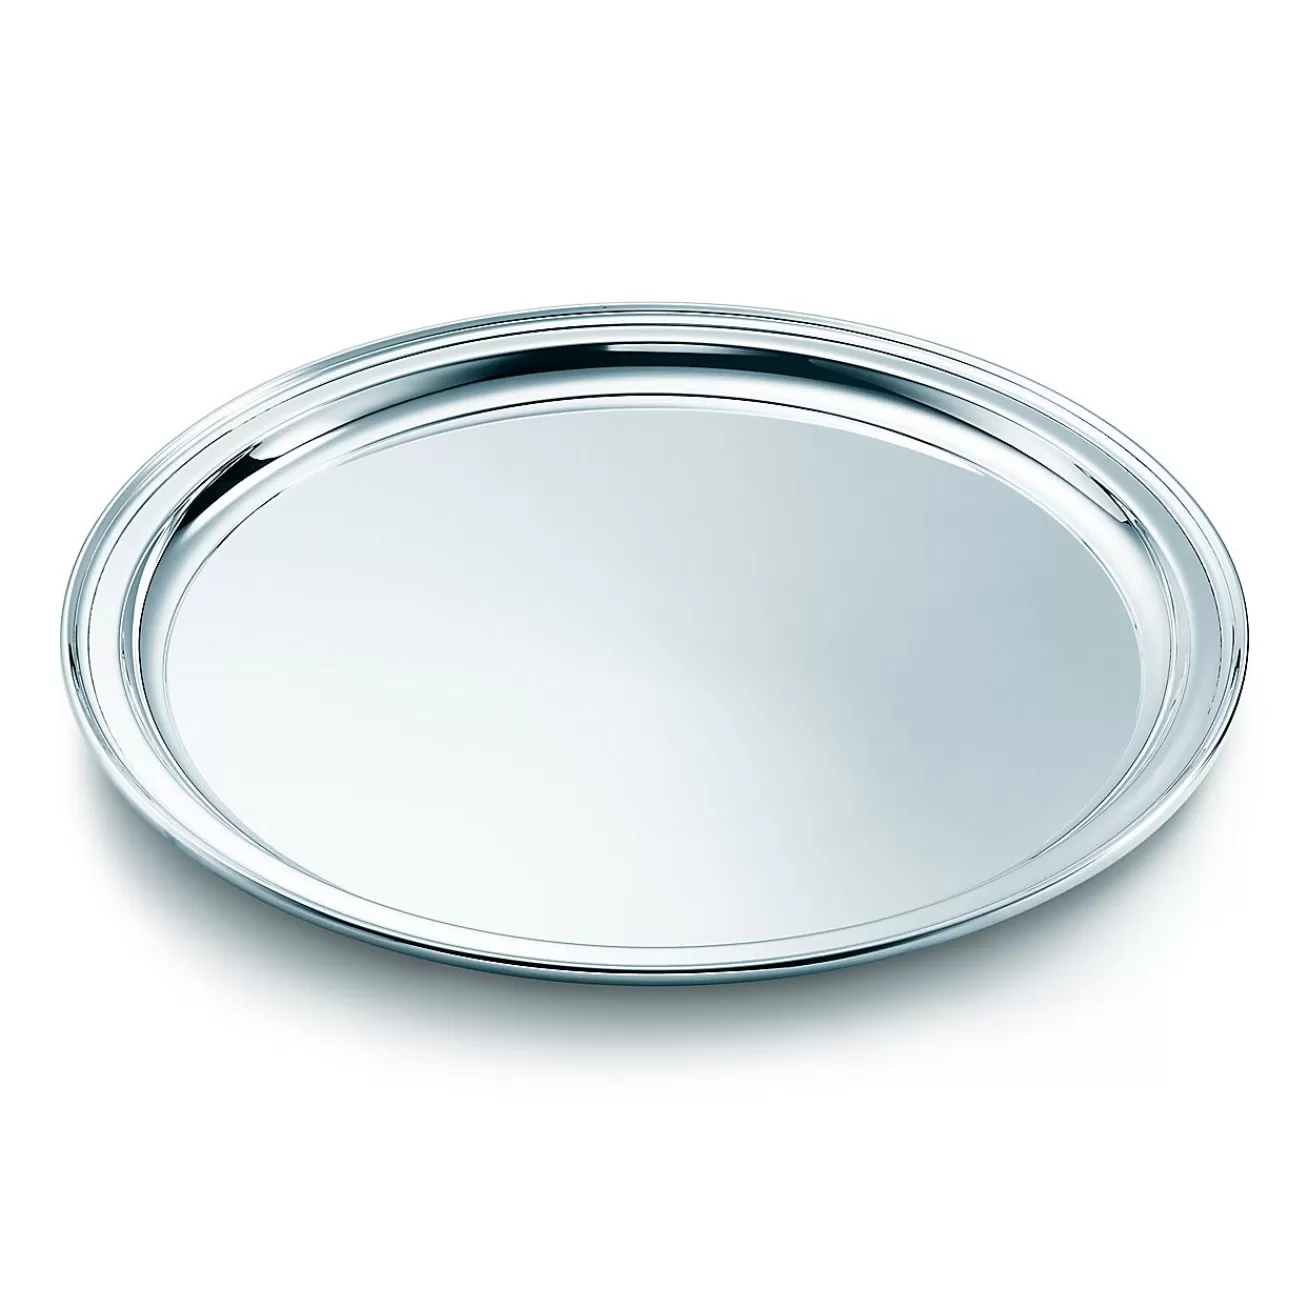 Tiffany & Co. Regency round tray in sterling silver. | ^ Tableware | Flatware & Trays